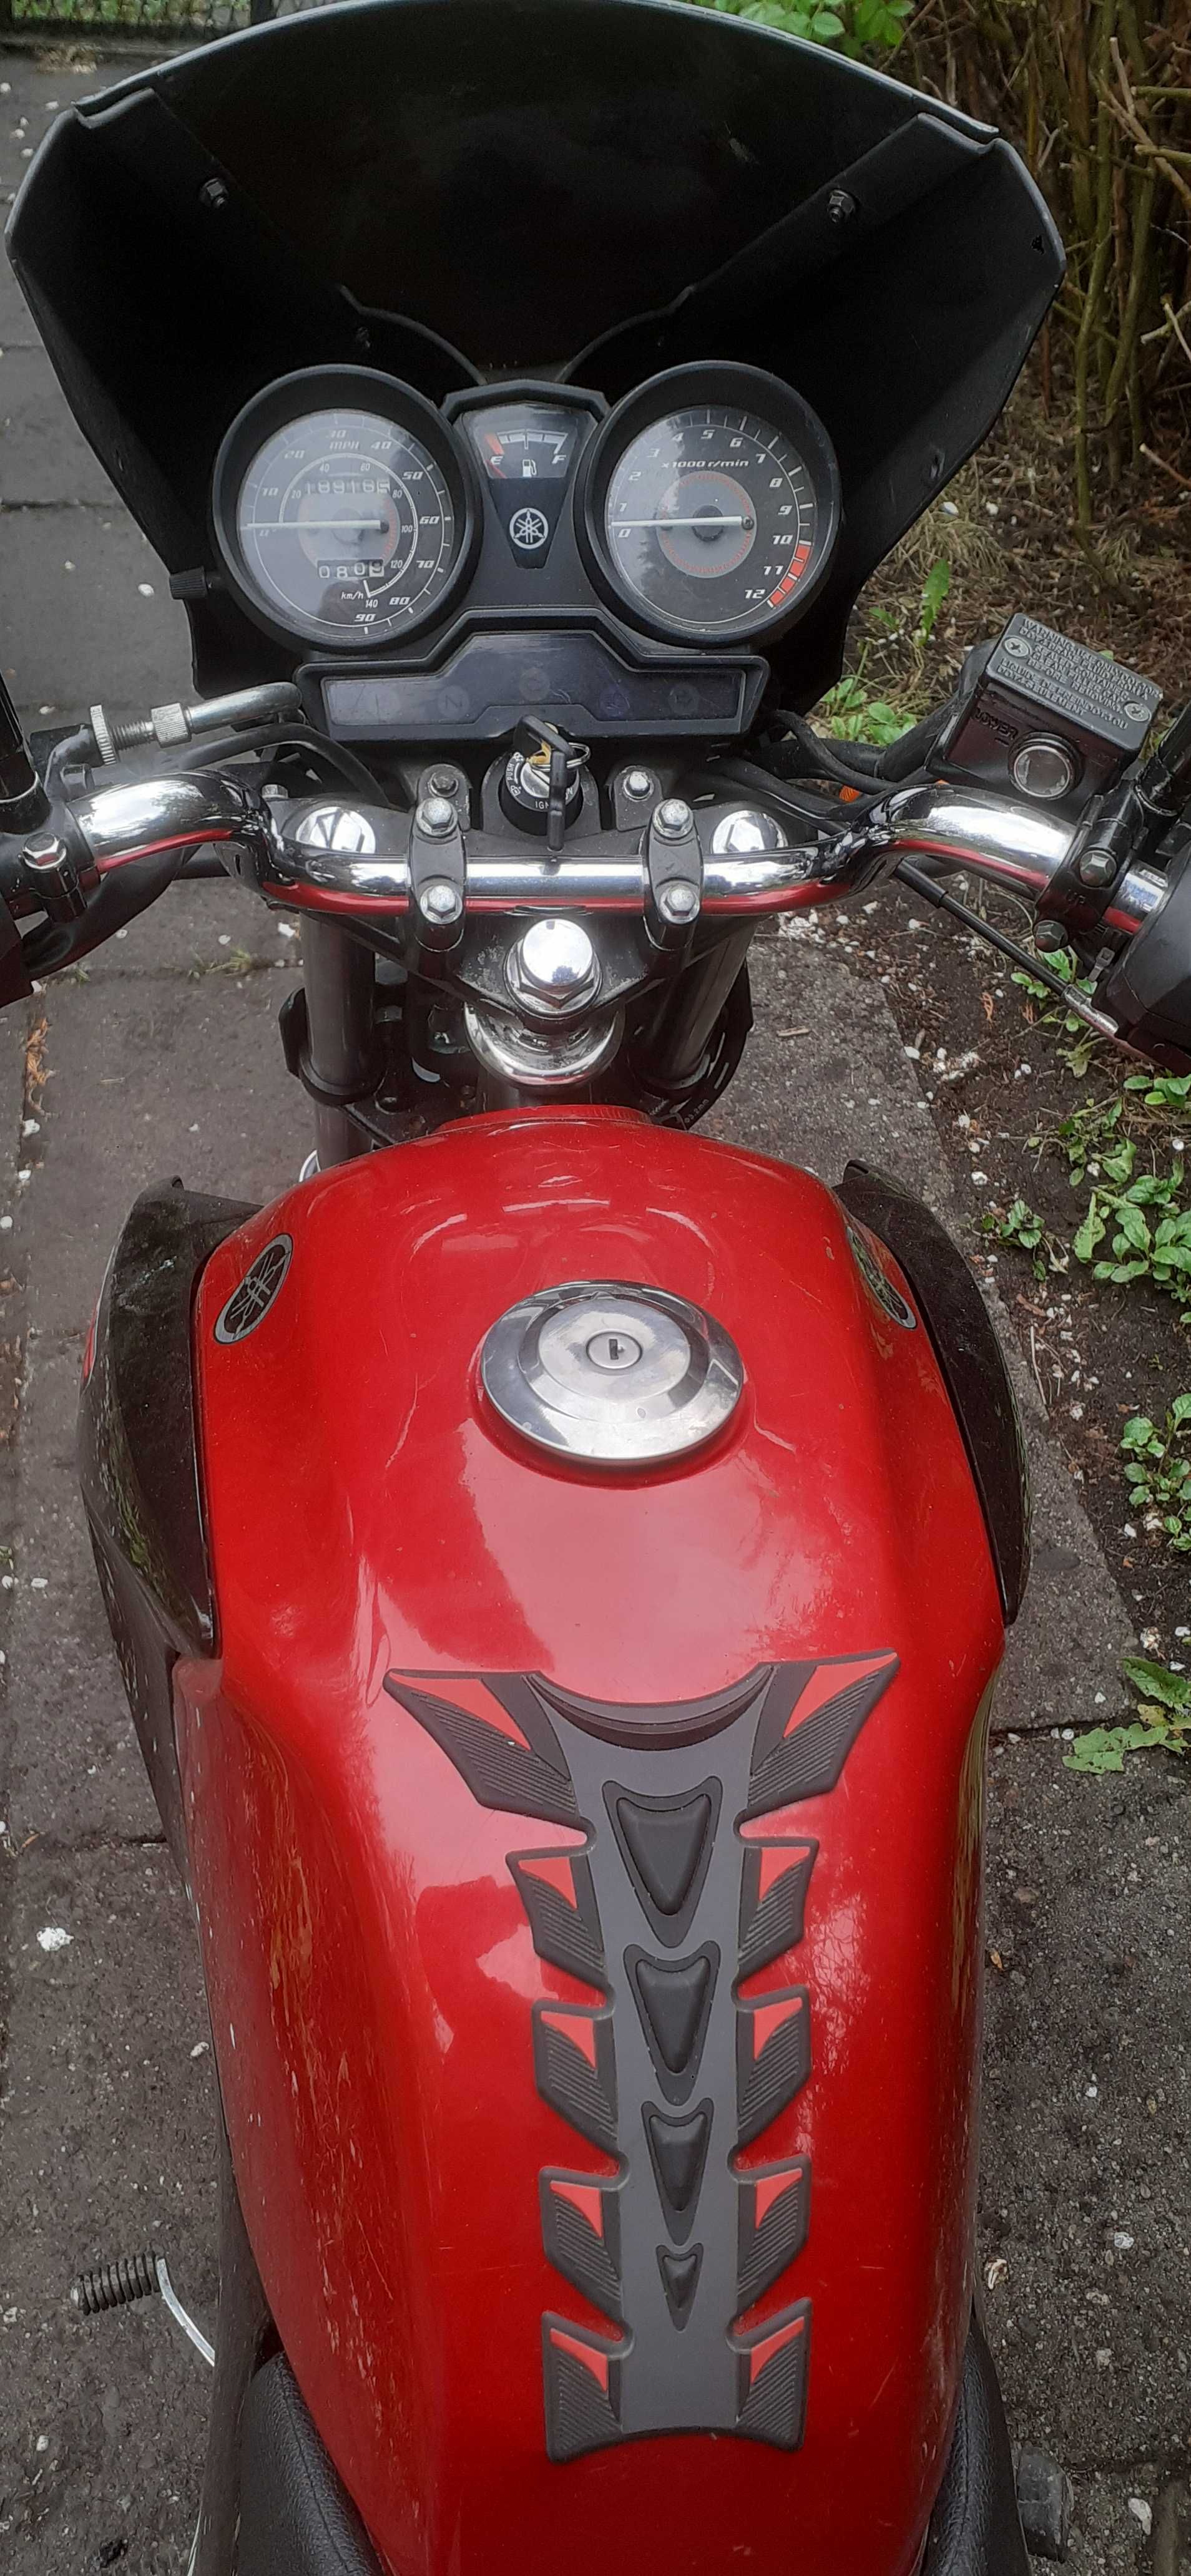 Yamaha ybr125cm motocykl